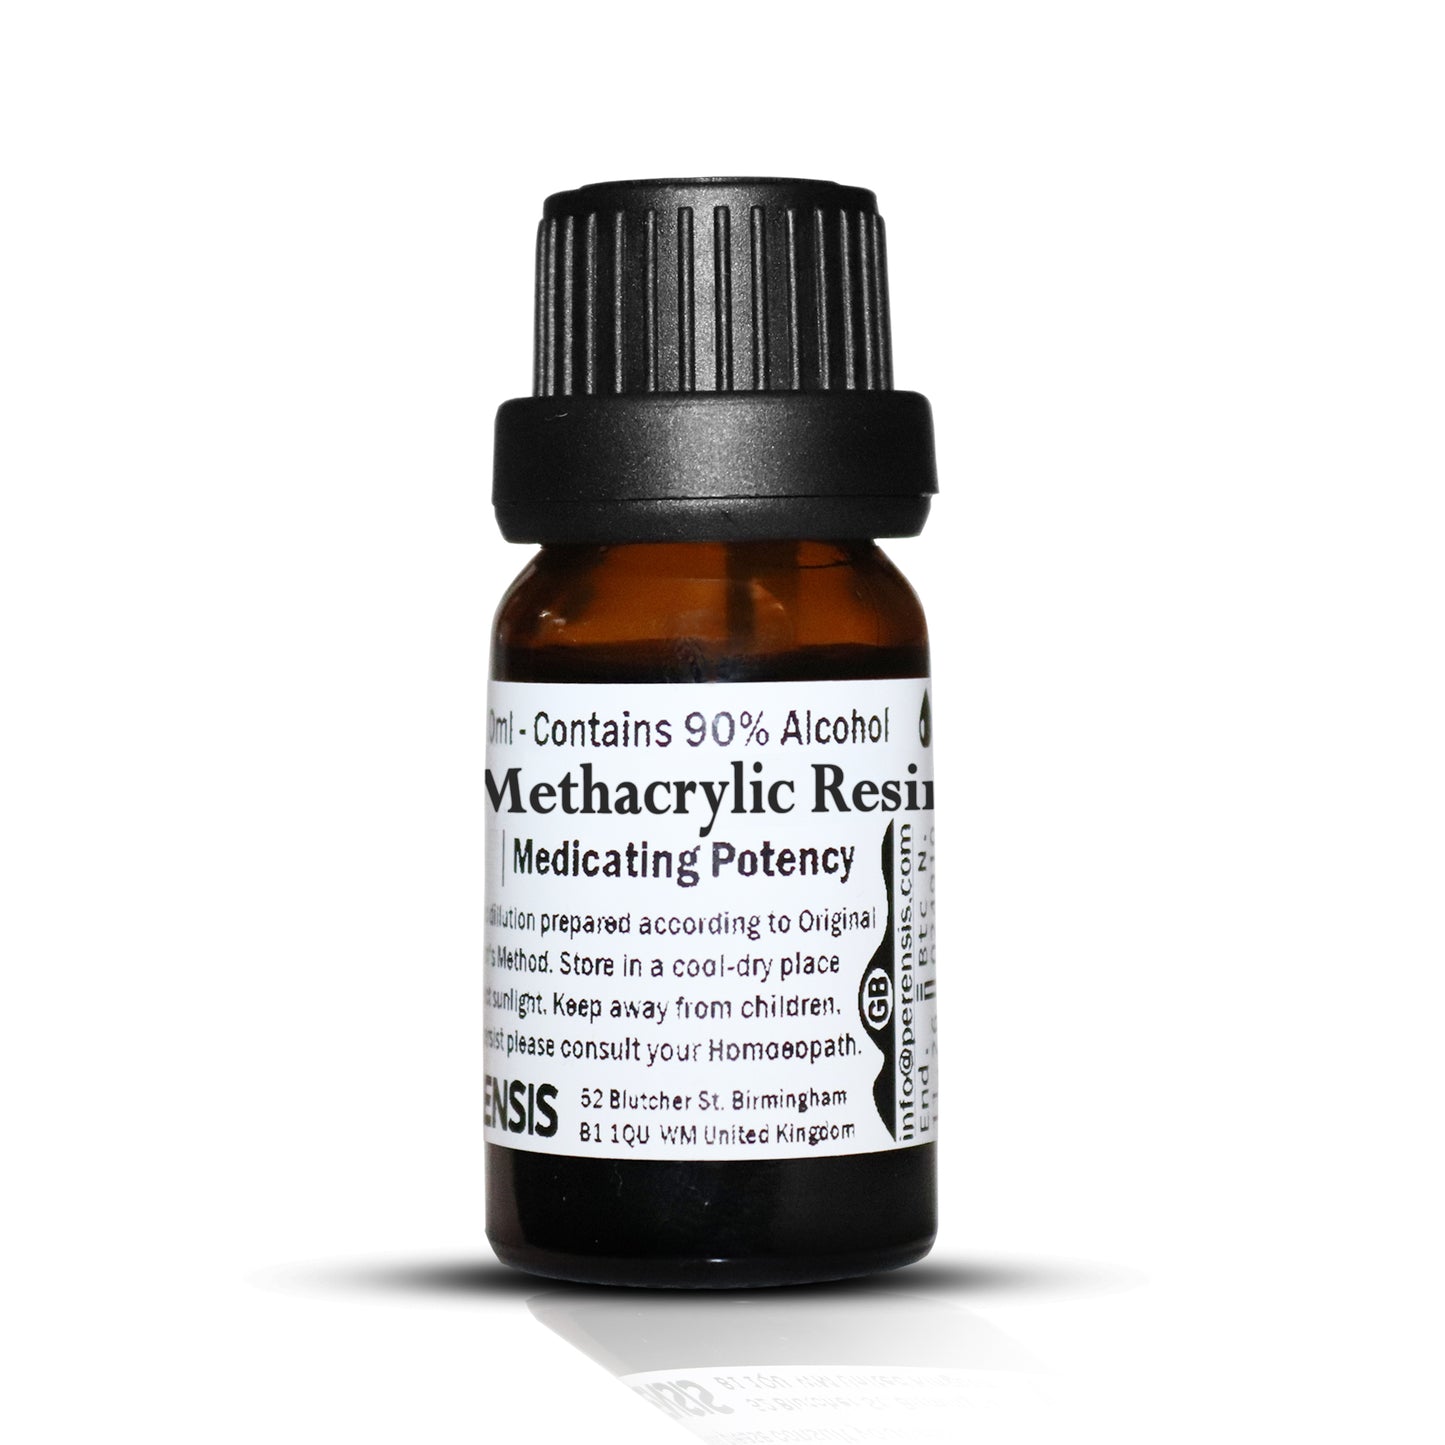 Methacrylic Resin